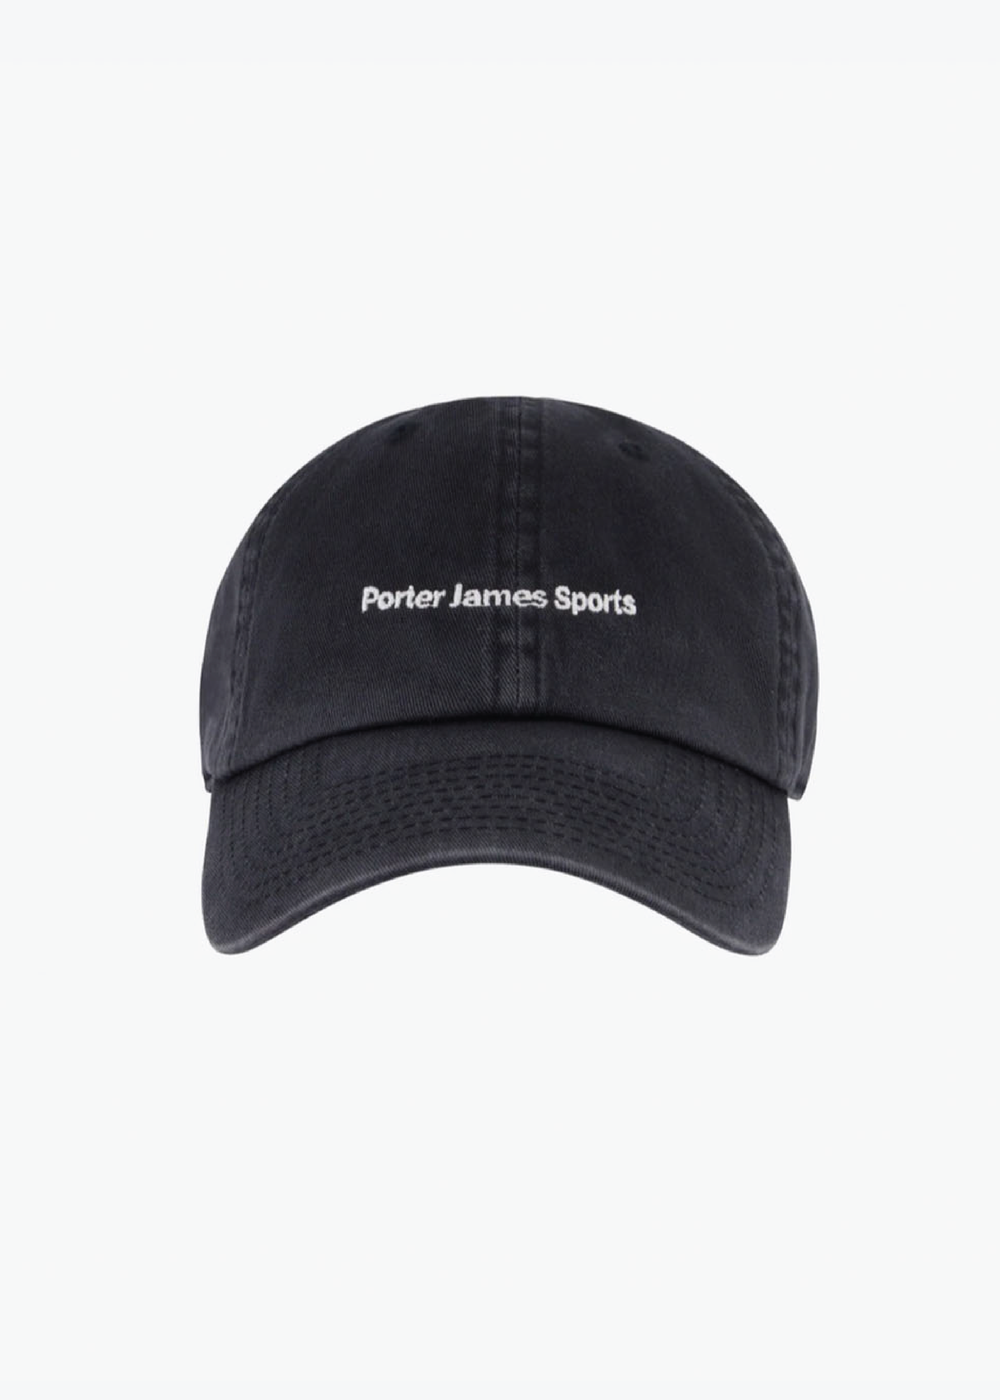 Porter James Sports Classic Cap - Soft Black | PORTER JAMES SPORTS | Mad About The Boy